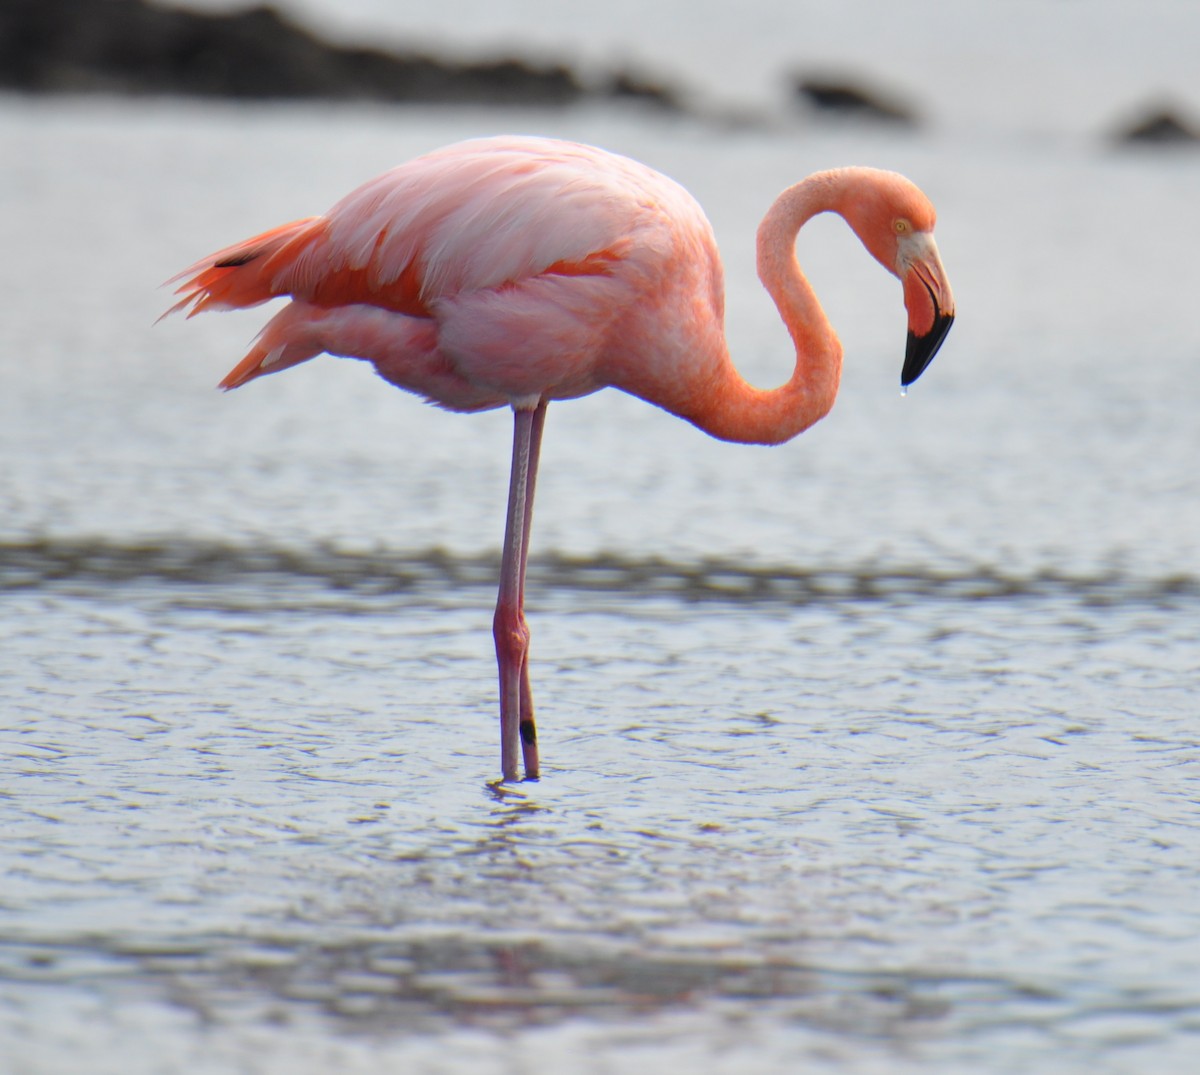 American Flamingo - M.K. McManus-Muldrow